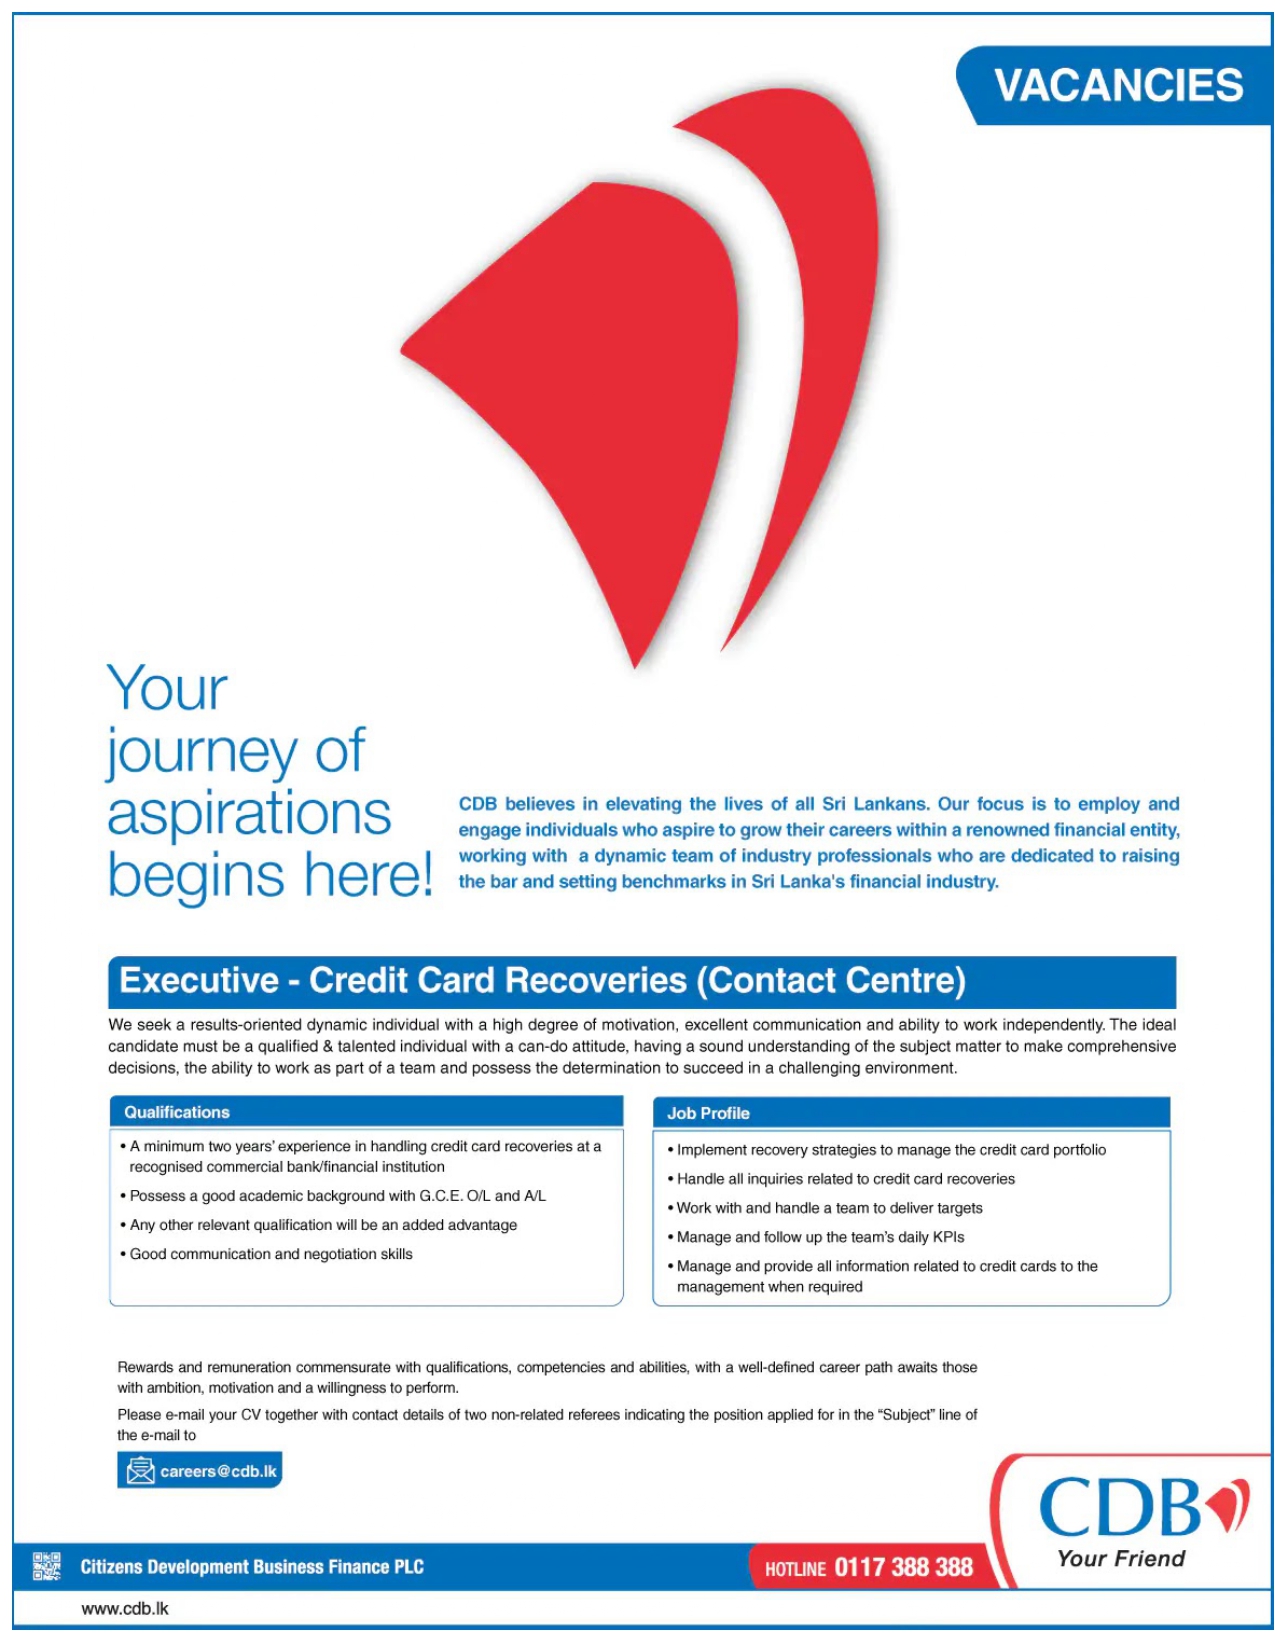 Executive (Credit Card Recoveries) Vacancies - CDB Finance Jobs Vacancies